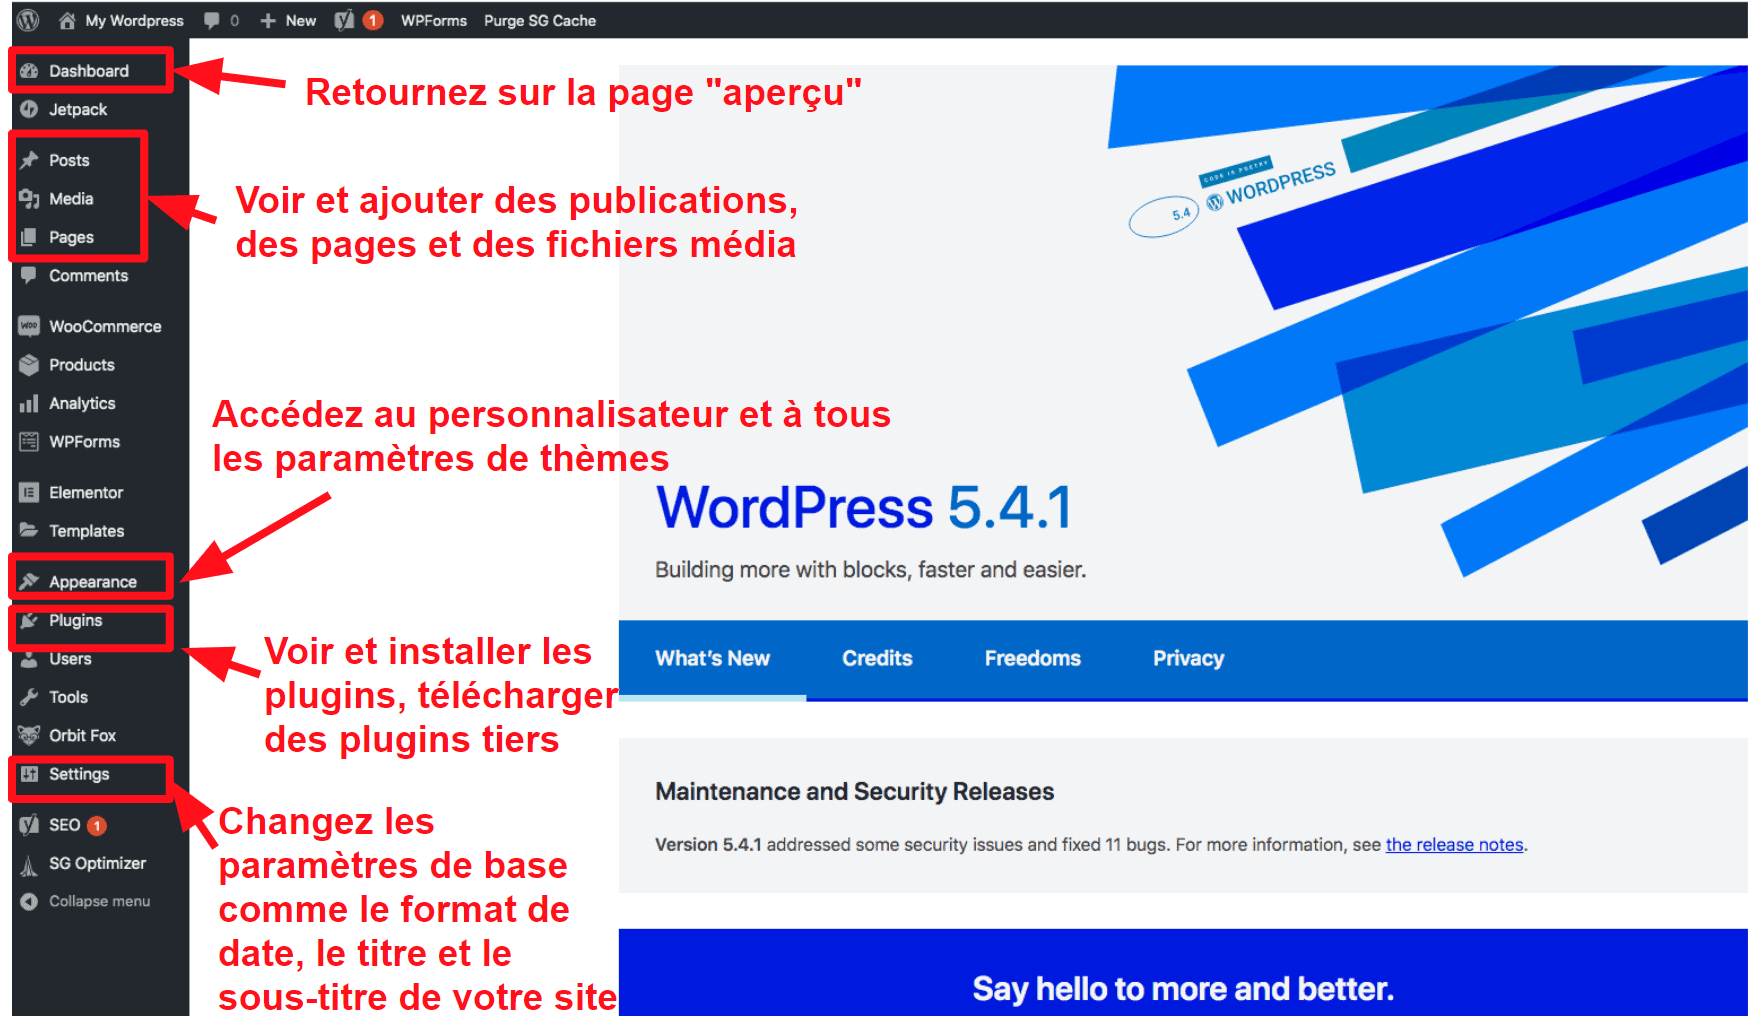 The WordPress dashboard FR16